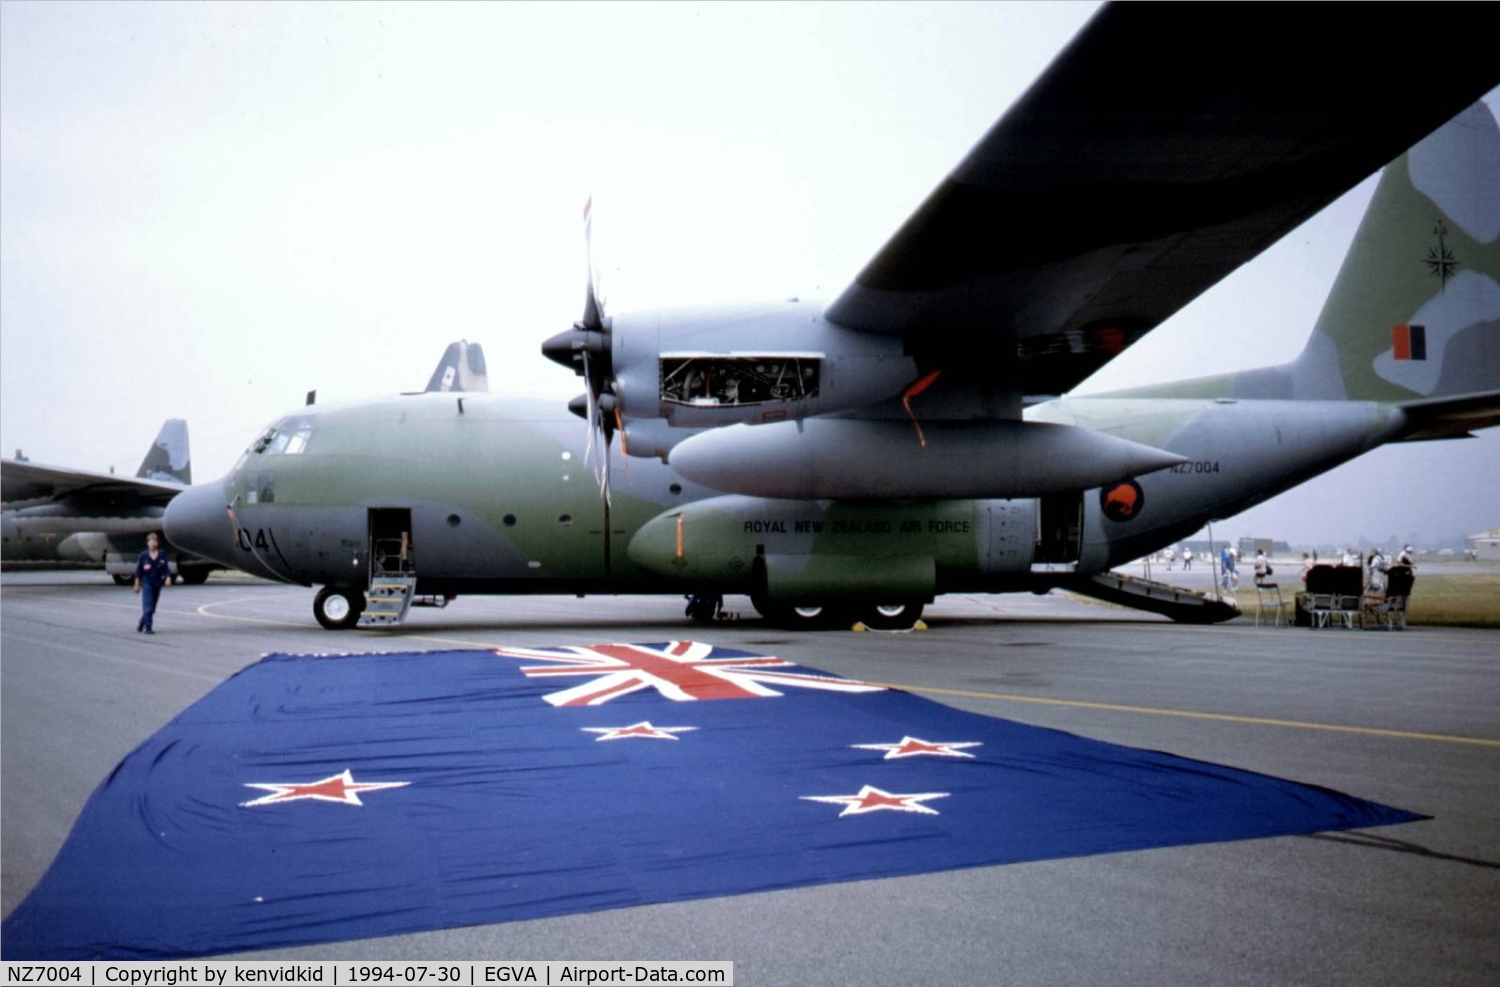 NZ7004, 1969 Lockheed C-130H Hercules C/N 382-4312, Royal New Zealand Air Force on static display at RIAT.